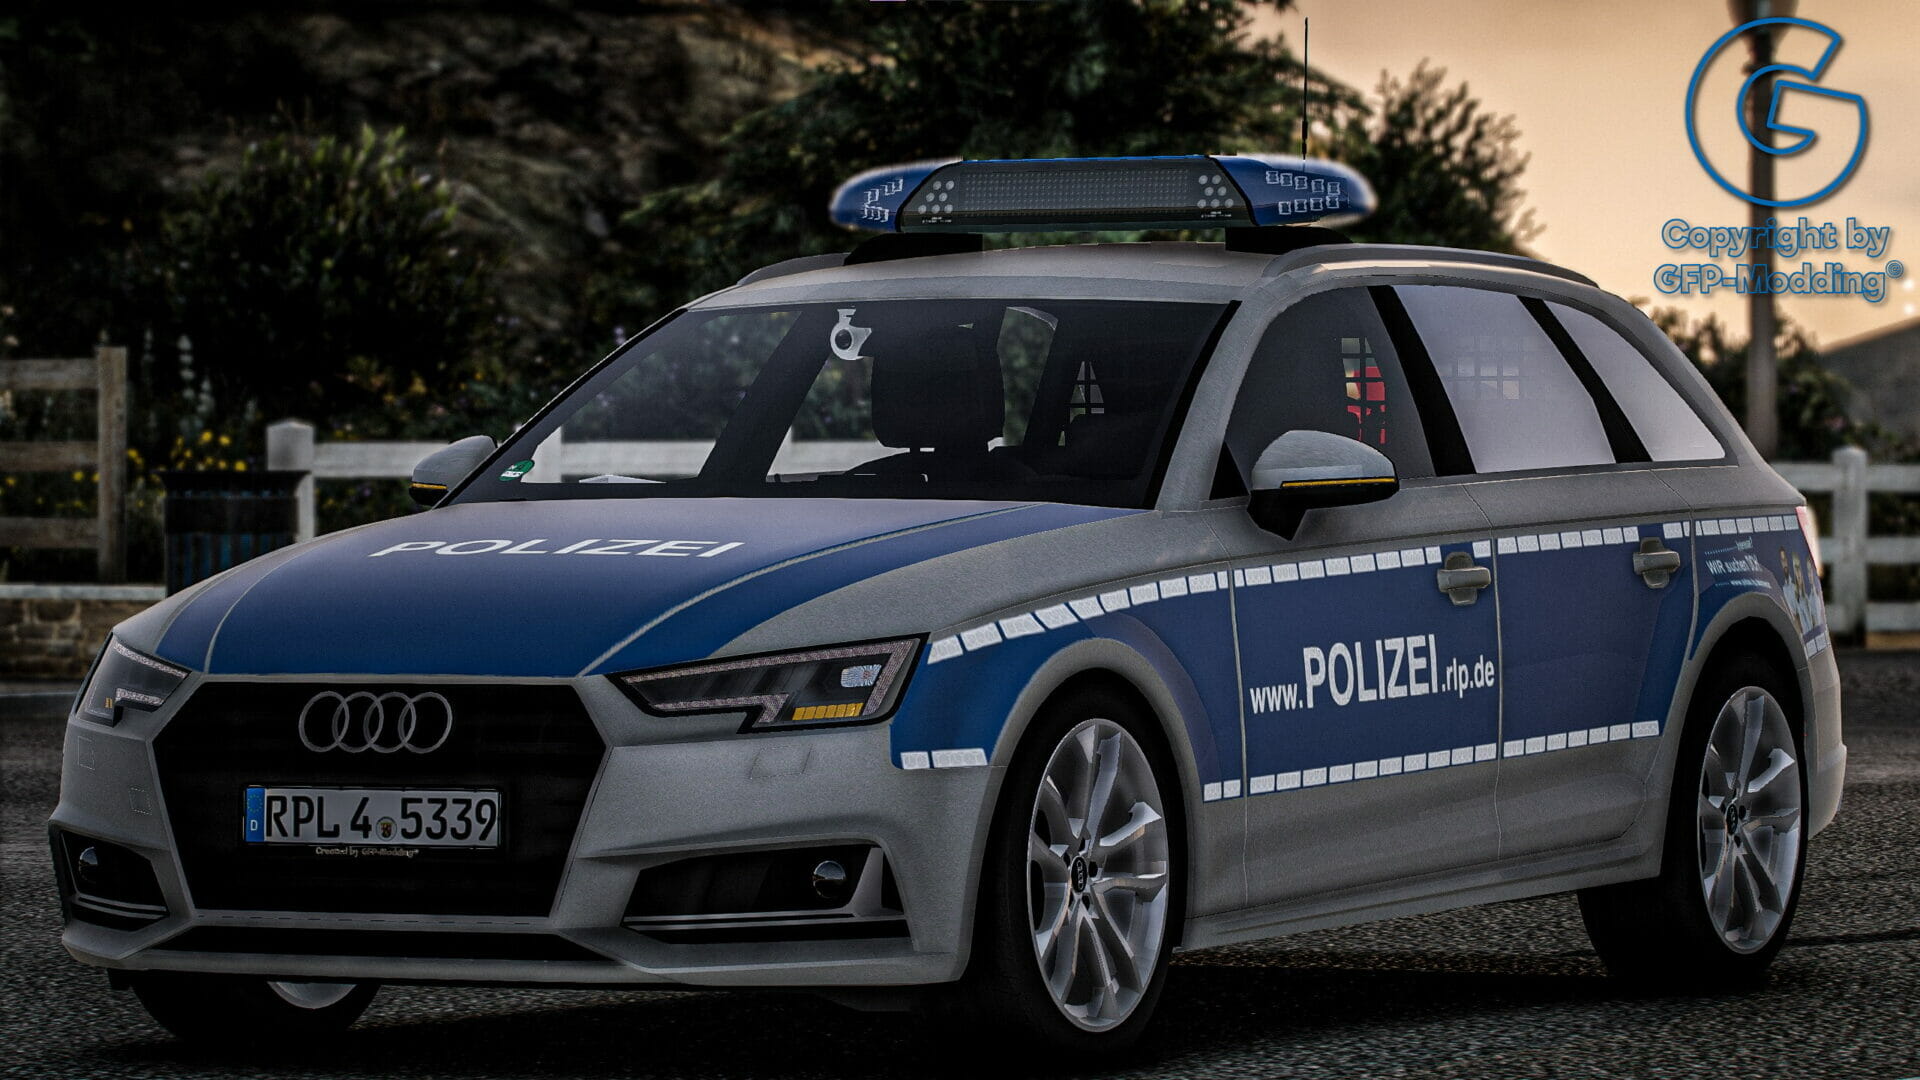 Audi A4 Polizei Rheinland-Pfalz [FIVEM] [ELS] [REFLECTION]